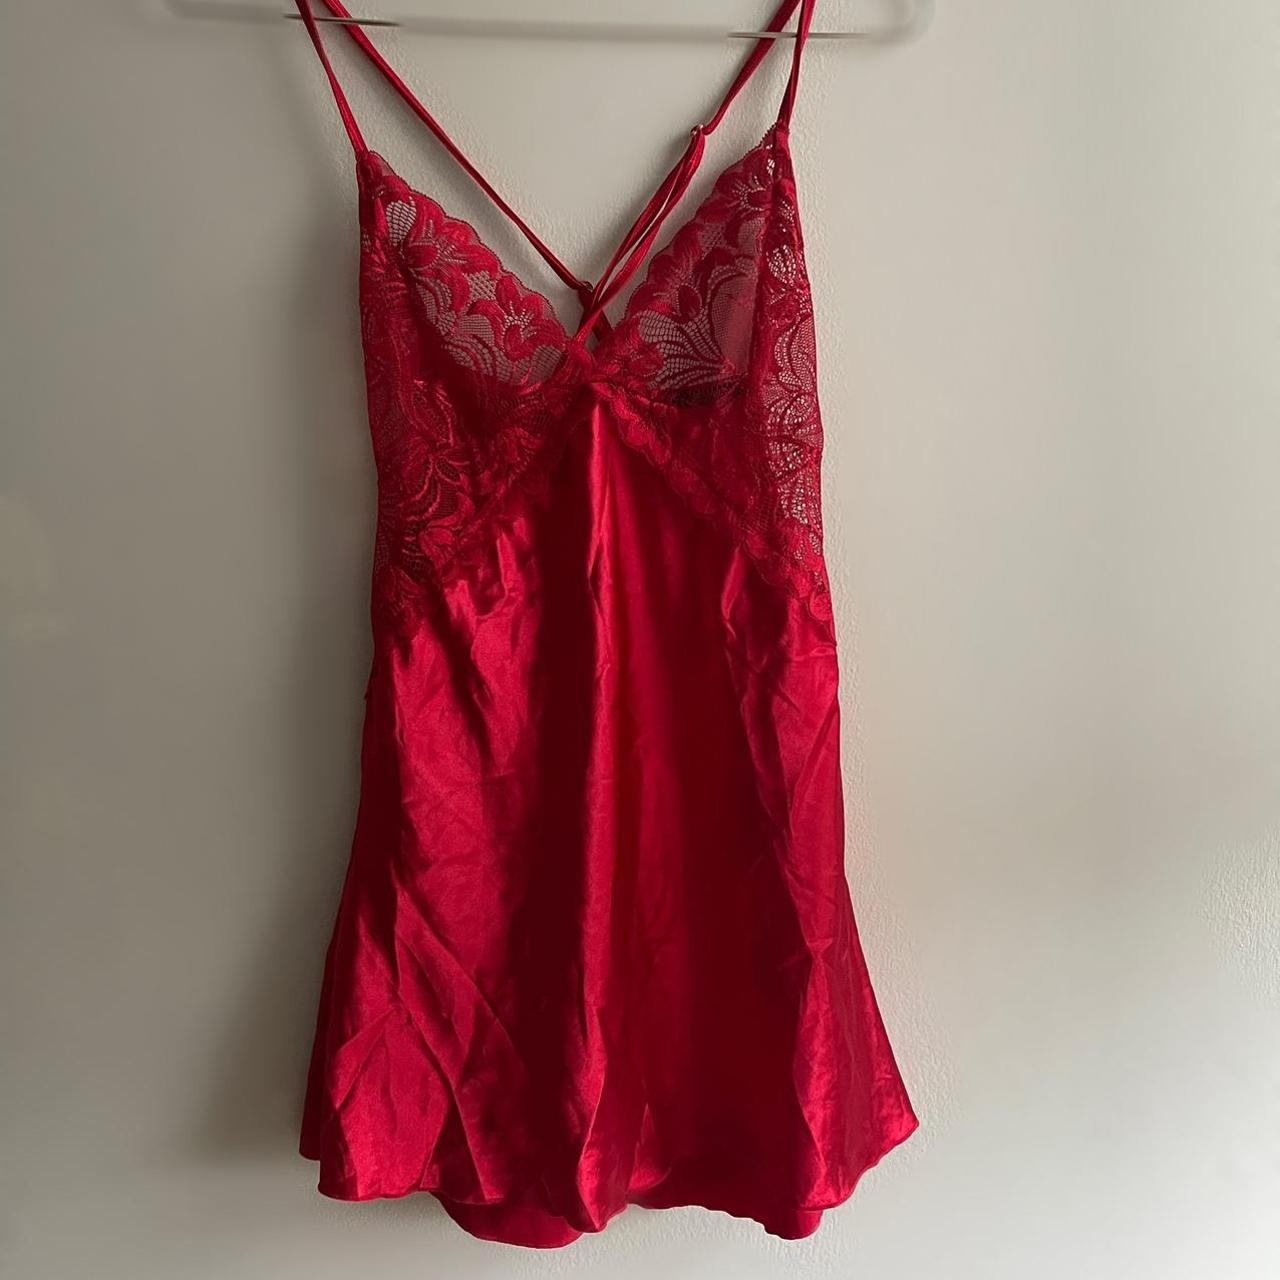 Women's Red and Burgundy Dress | Depop